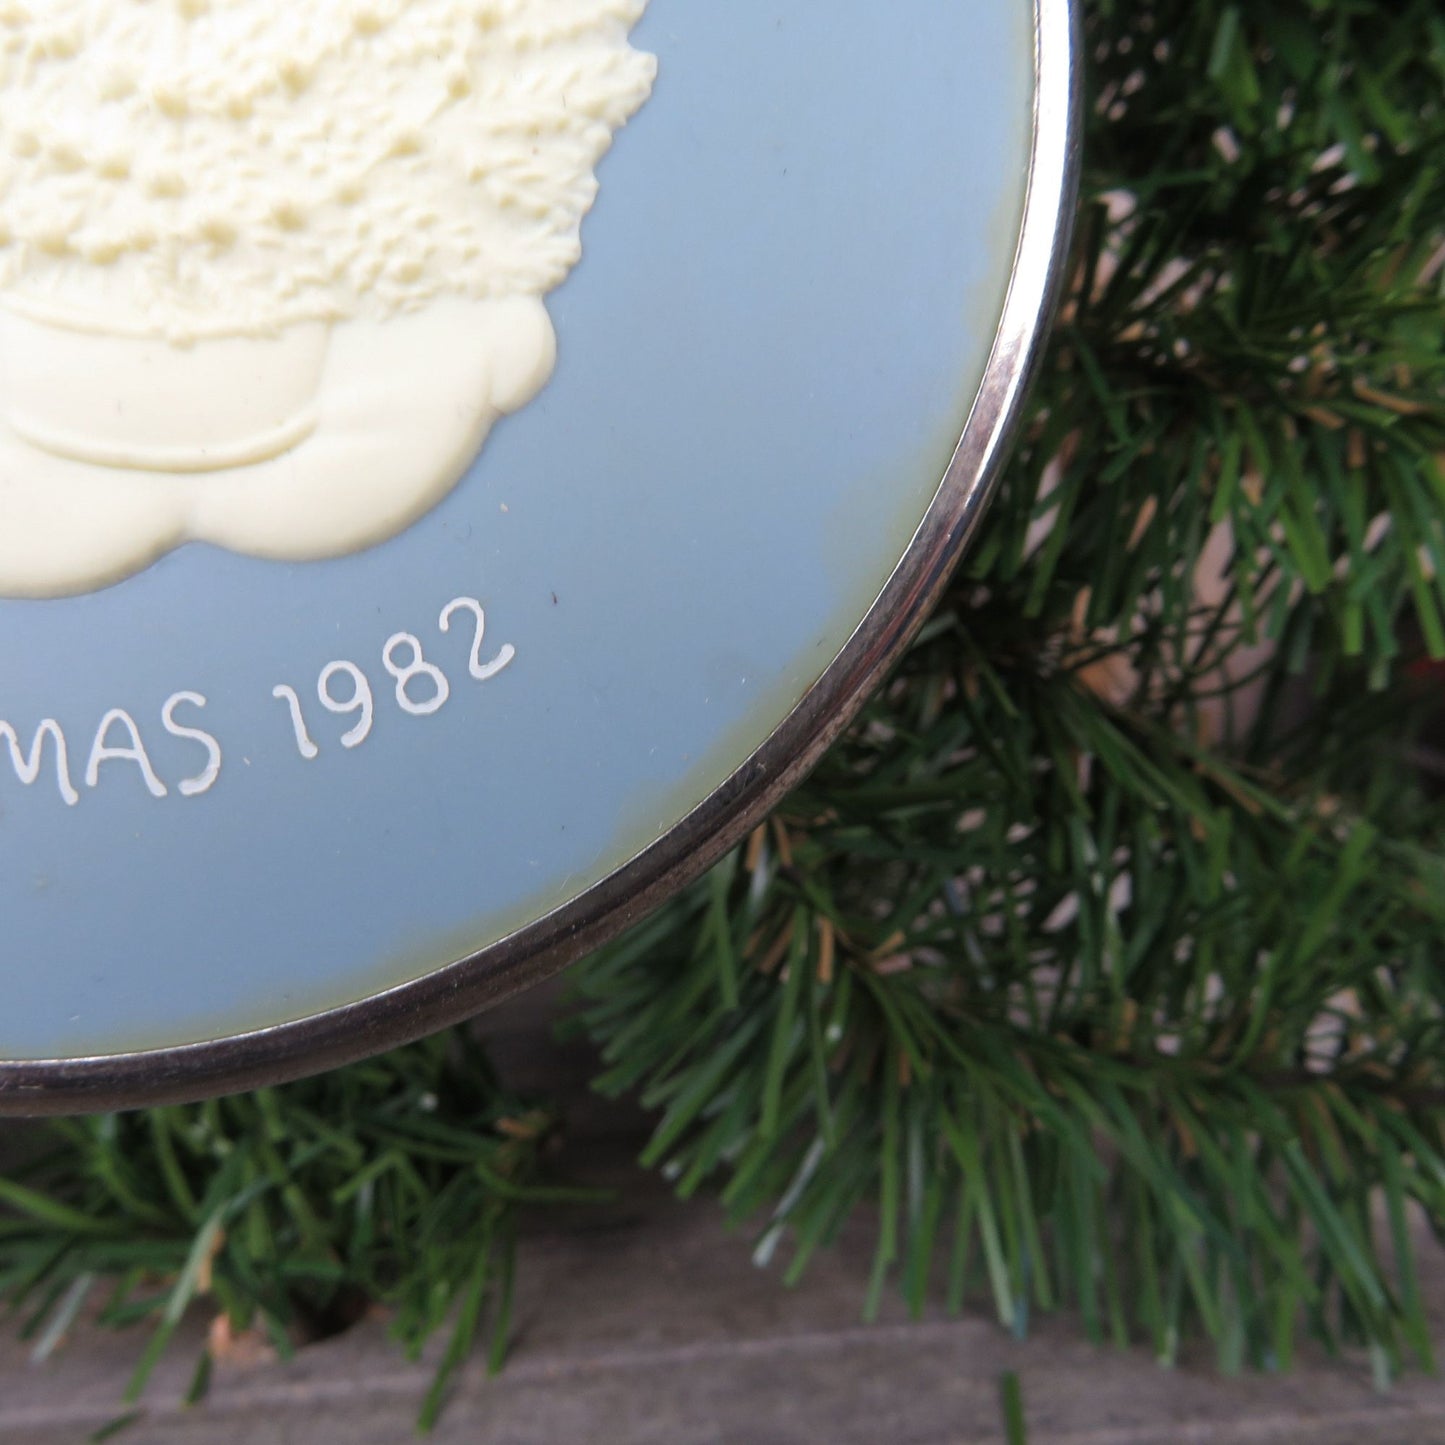 Vintage Betsey Clark Christmas Cameo Ornament Trimming Trees Making Merry Memories Hallmark 1982